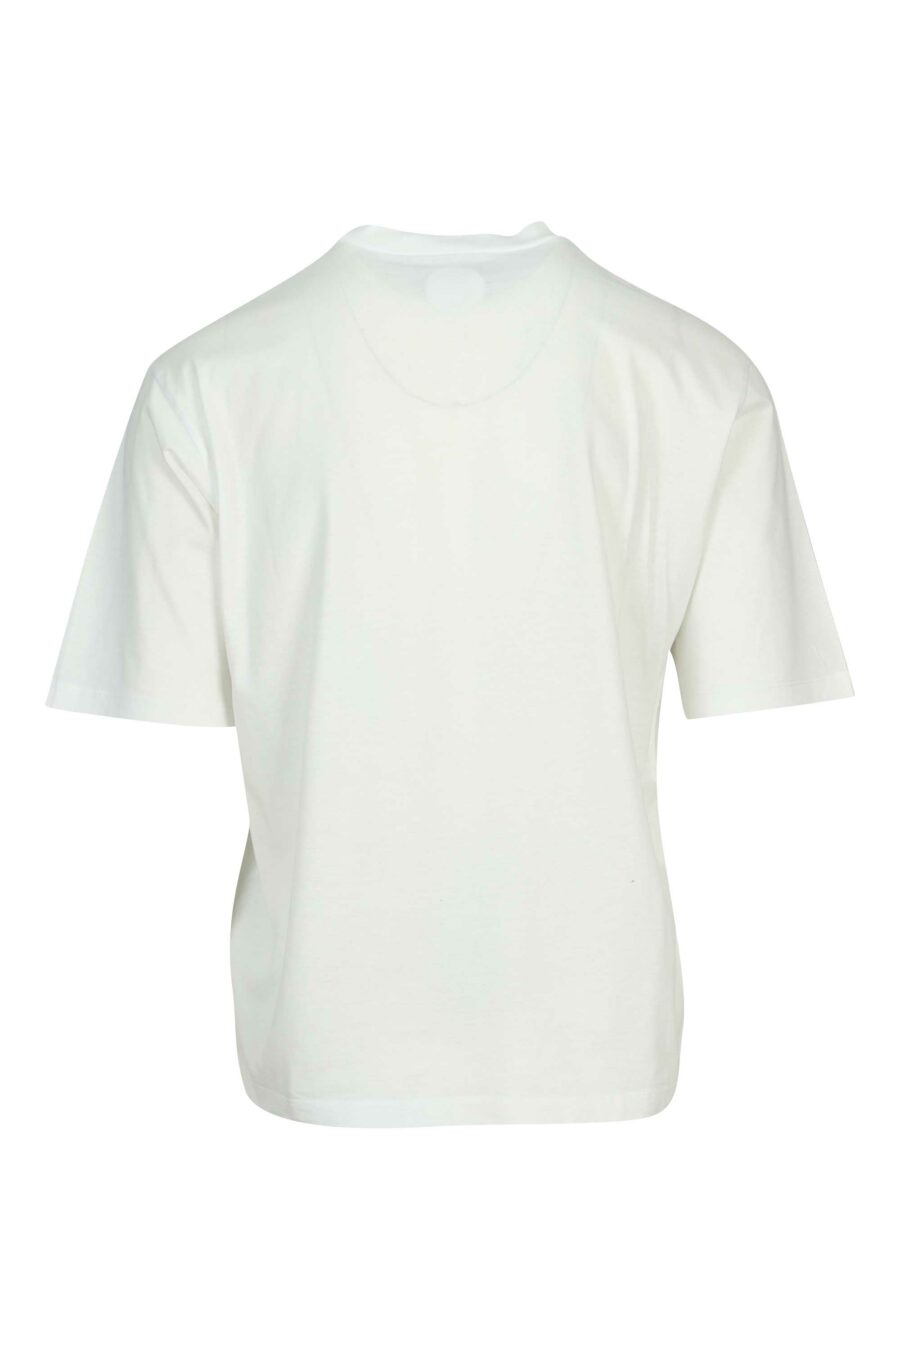 Camiseta blanca "oversize" con maxilogo "pop culture art 80's" - 8054148265694 1